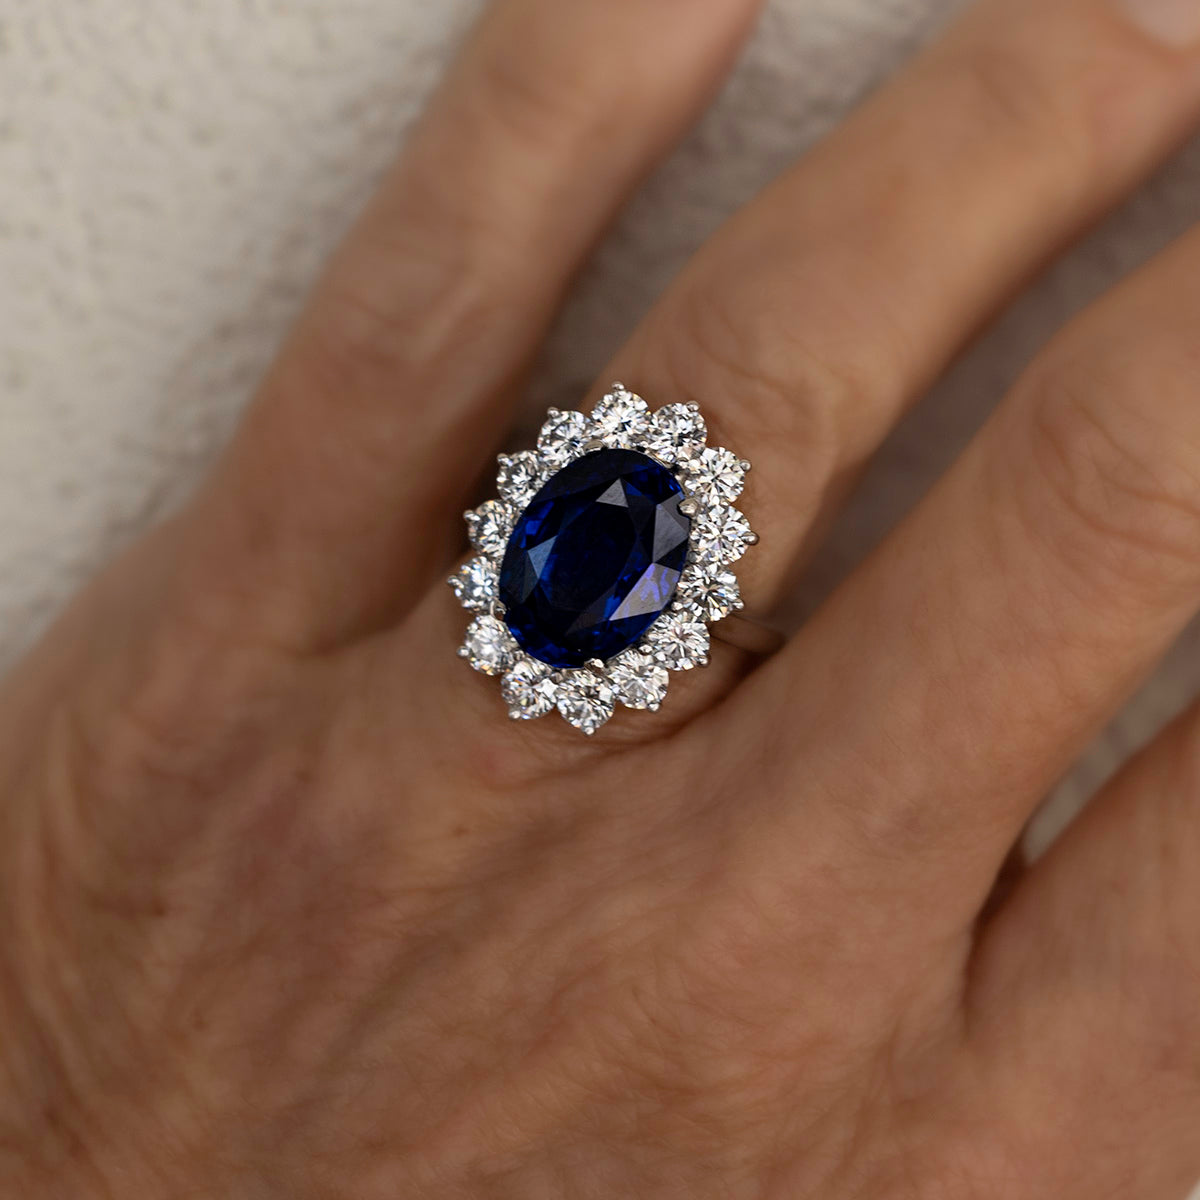 Top Gem 10.06 Carat Sapphire Ring